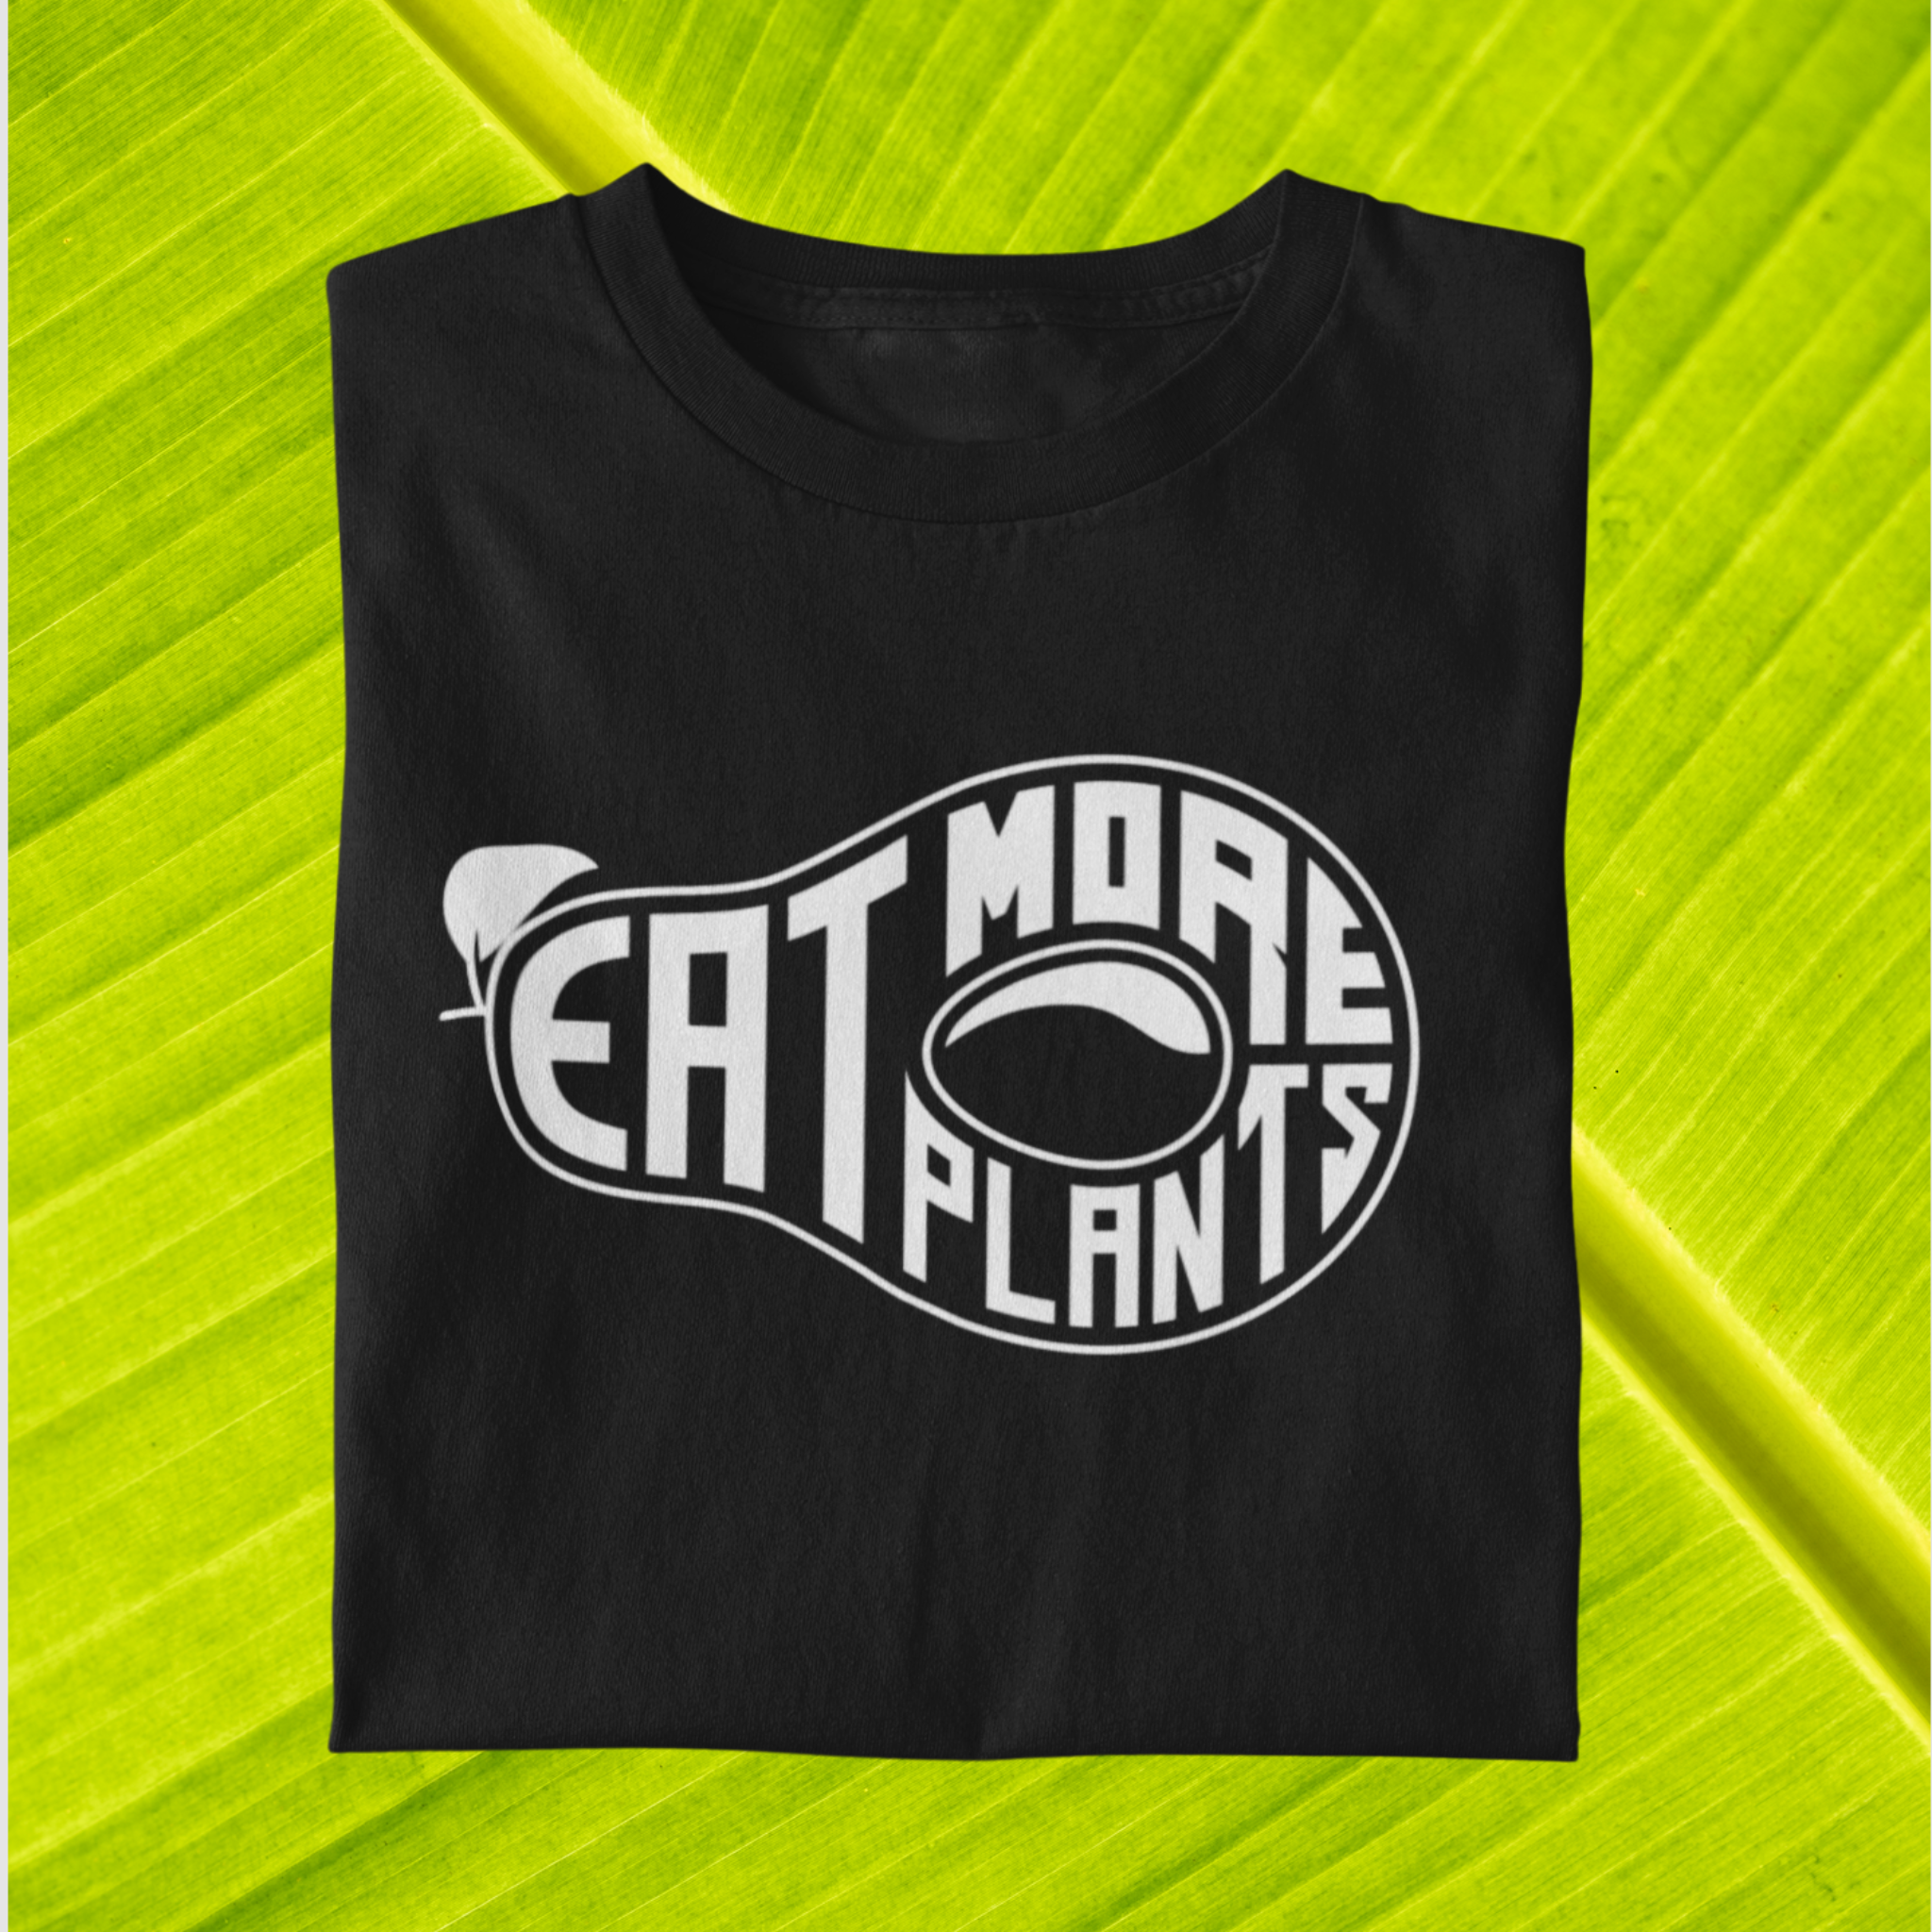 organic vegan t-shirts in black saying eat more plants, folded on leaf background